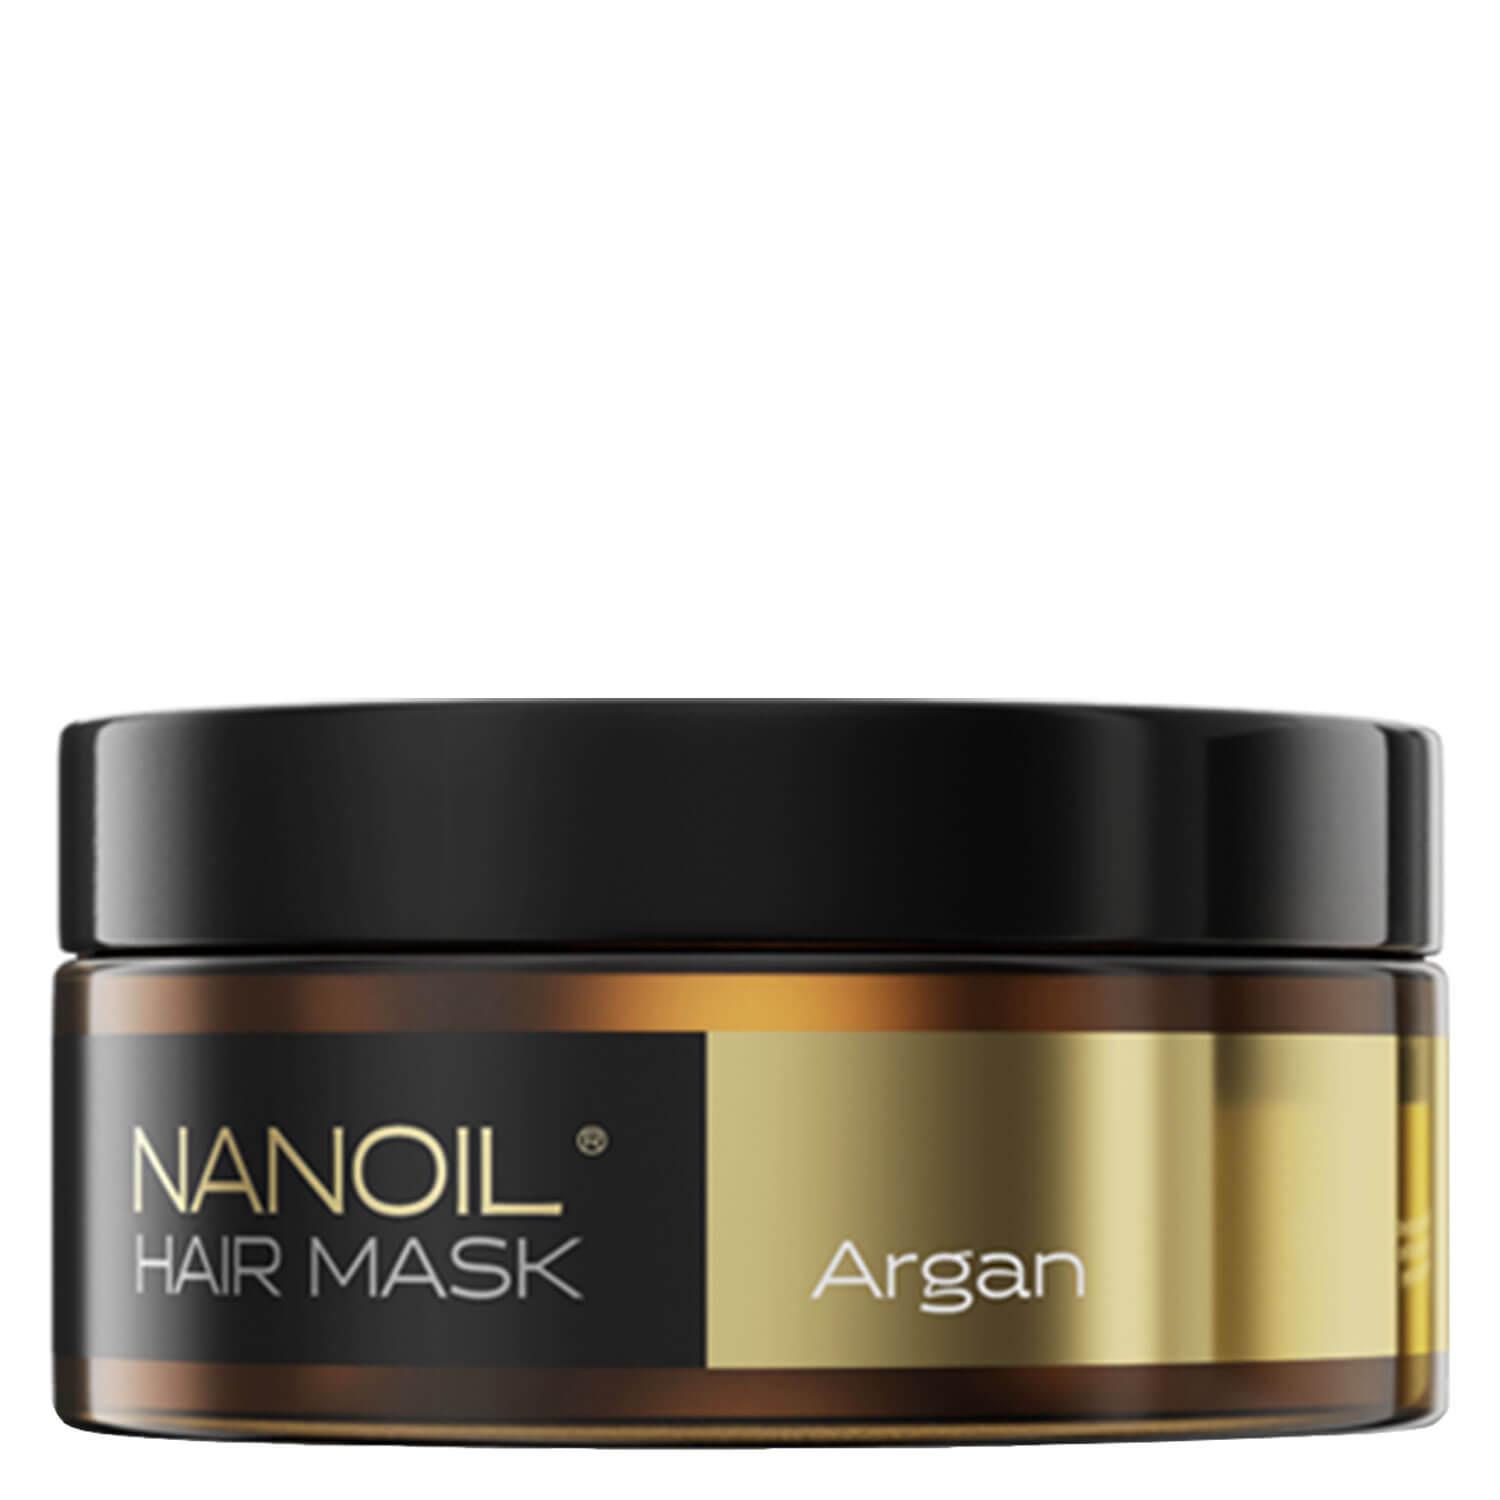 Nanoil - Argan Hair Mask